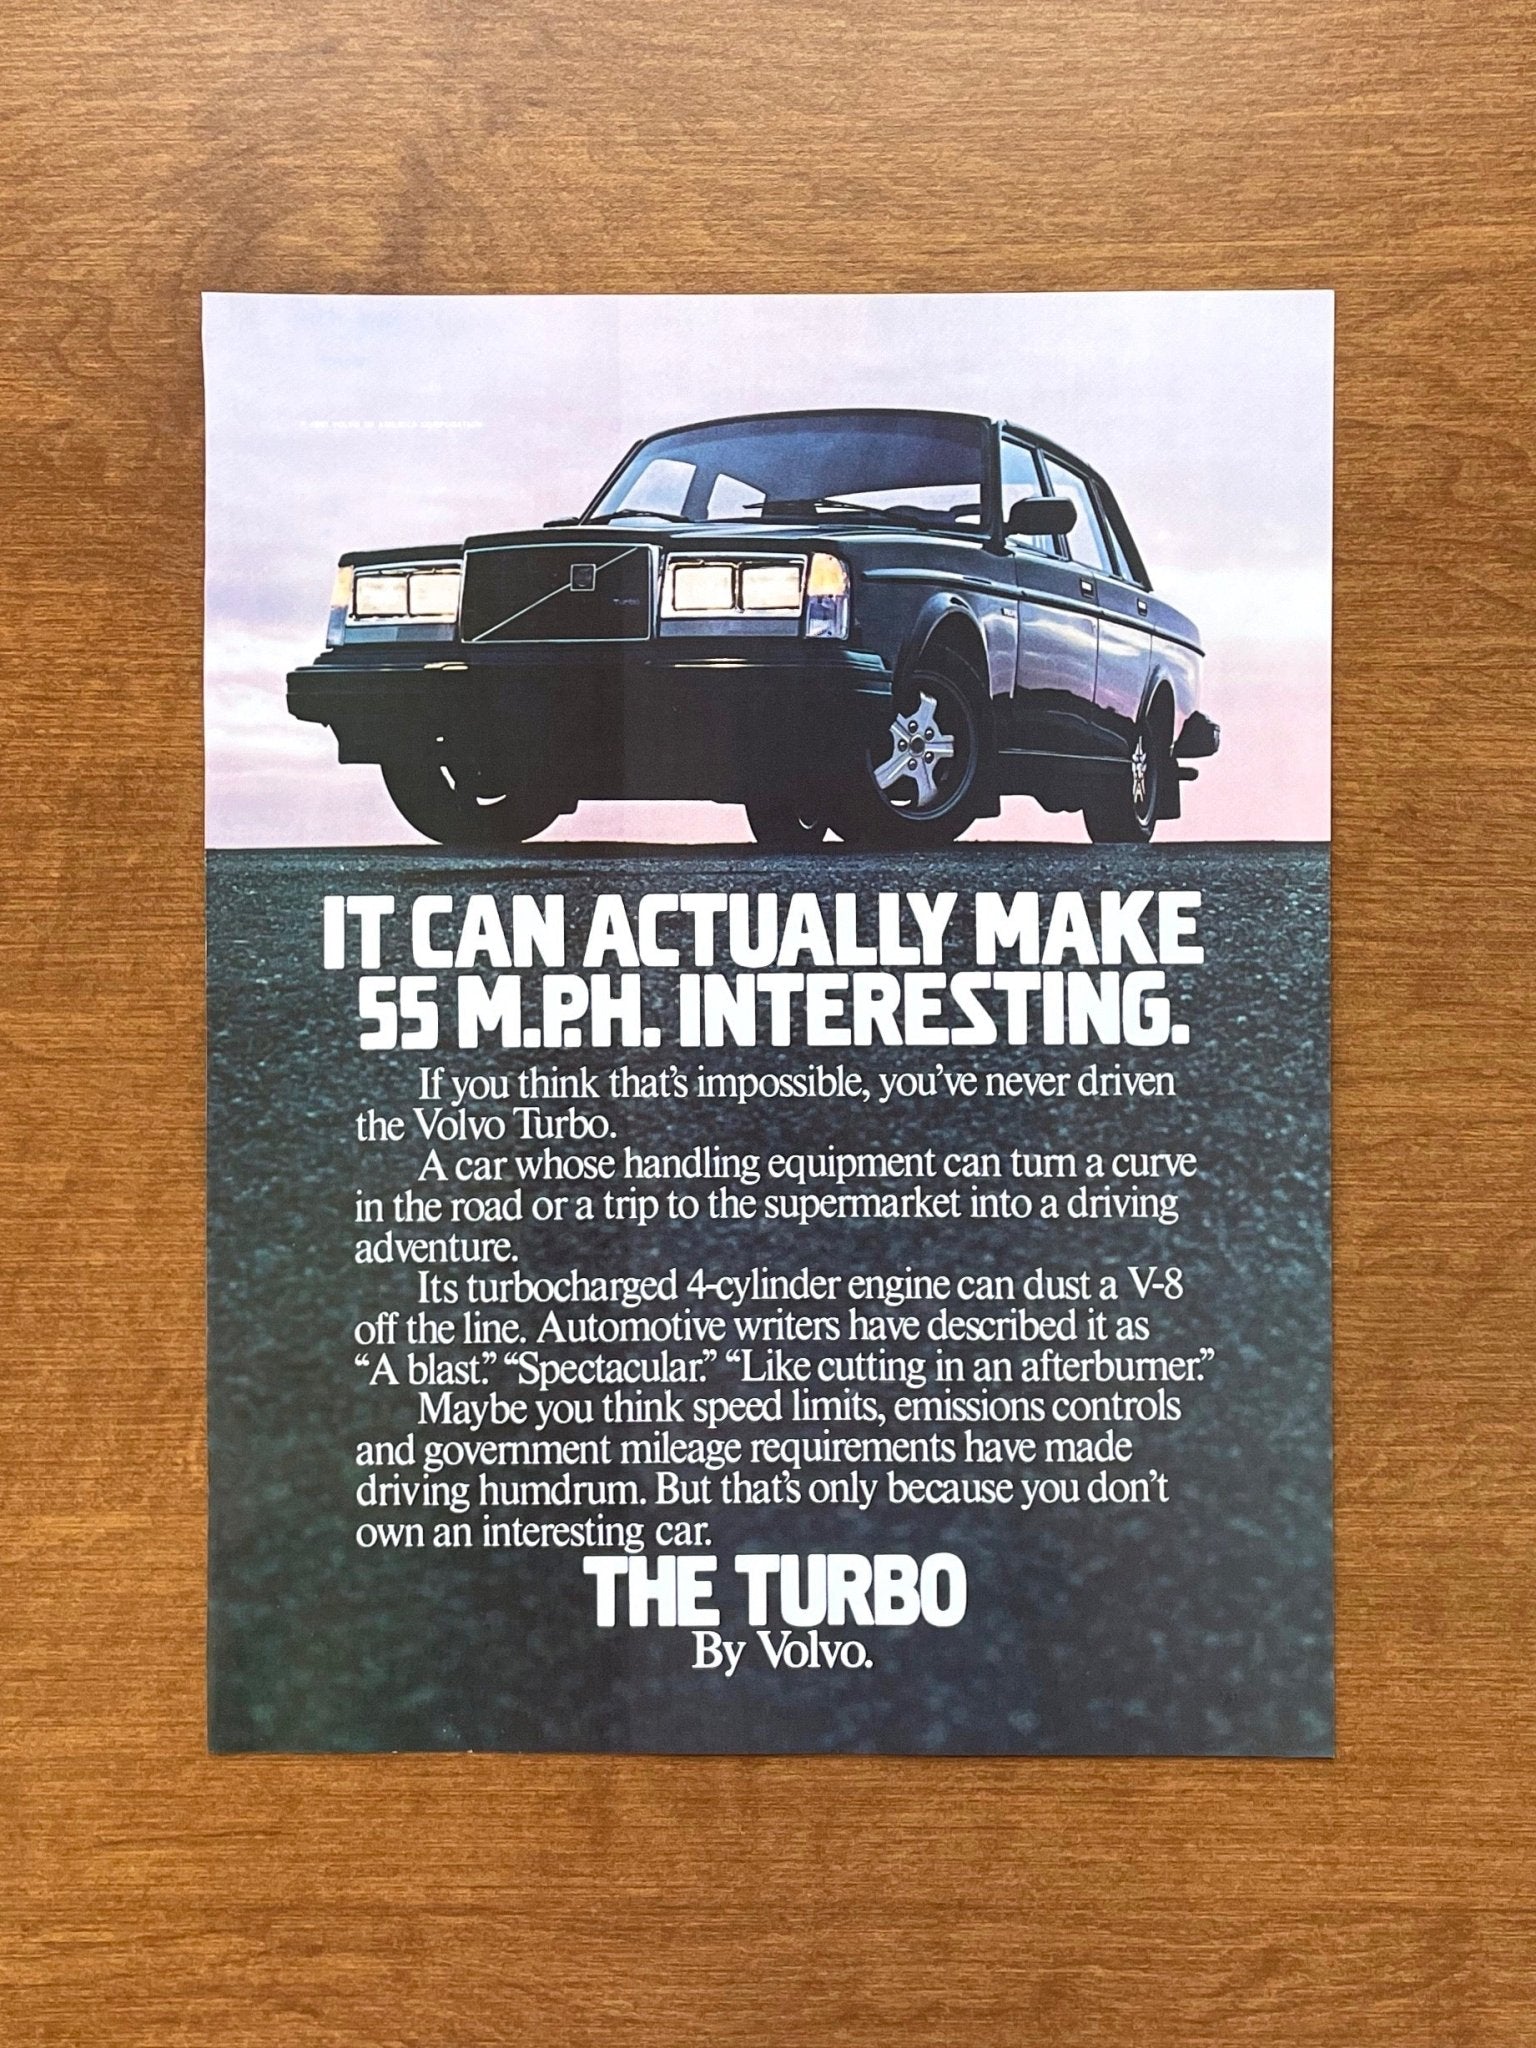 1982 Volvo Turbo "Make 55 M.P.H. Interesting." Advertisement